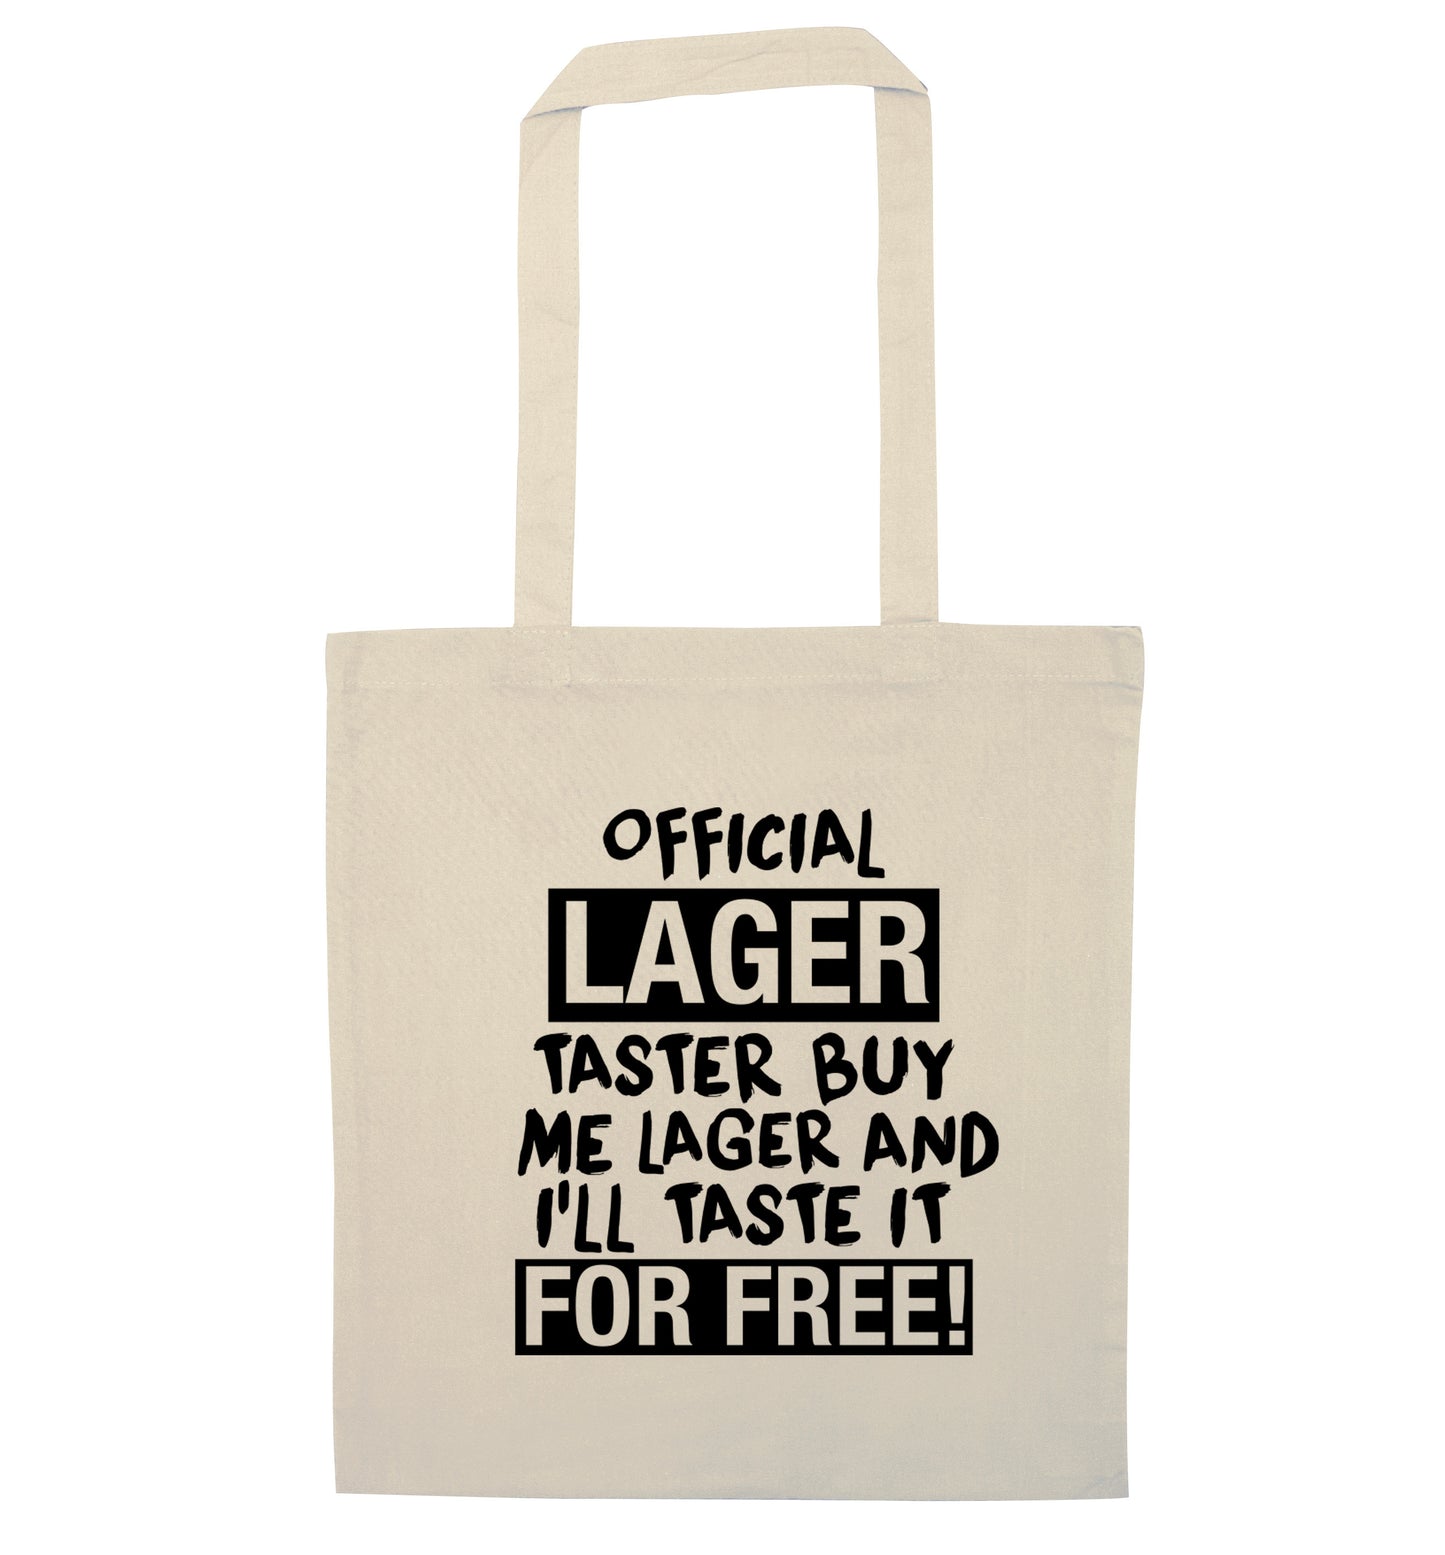 Official lager taster buy me lager and I'll taste it for free! natural tote bag